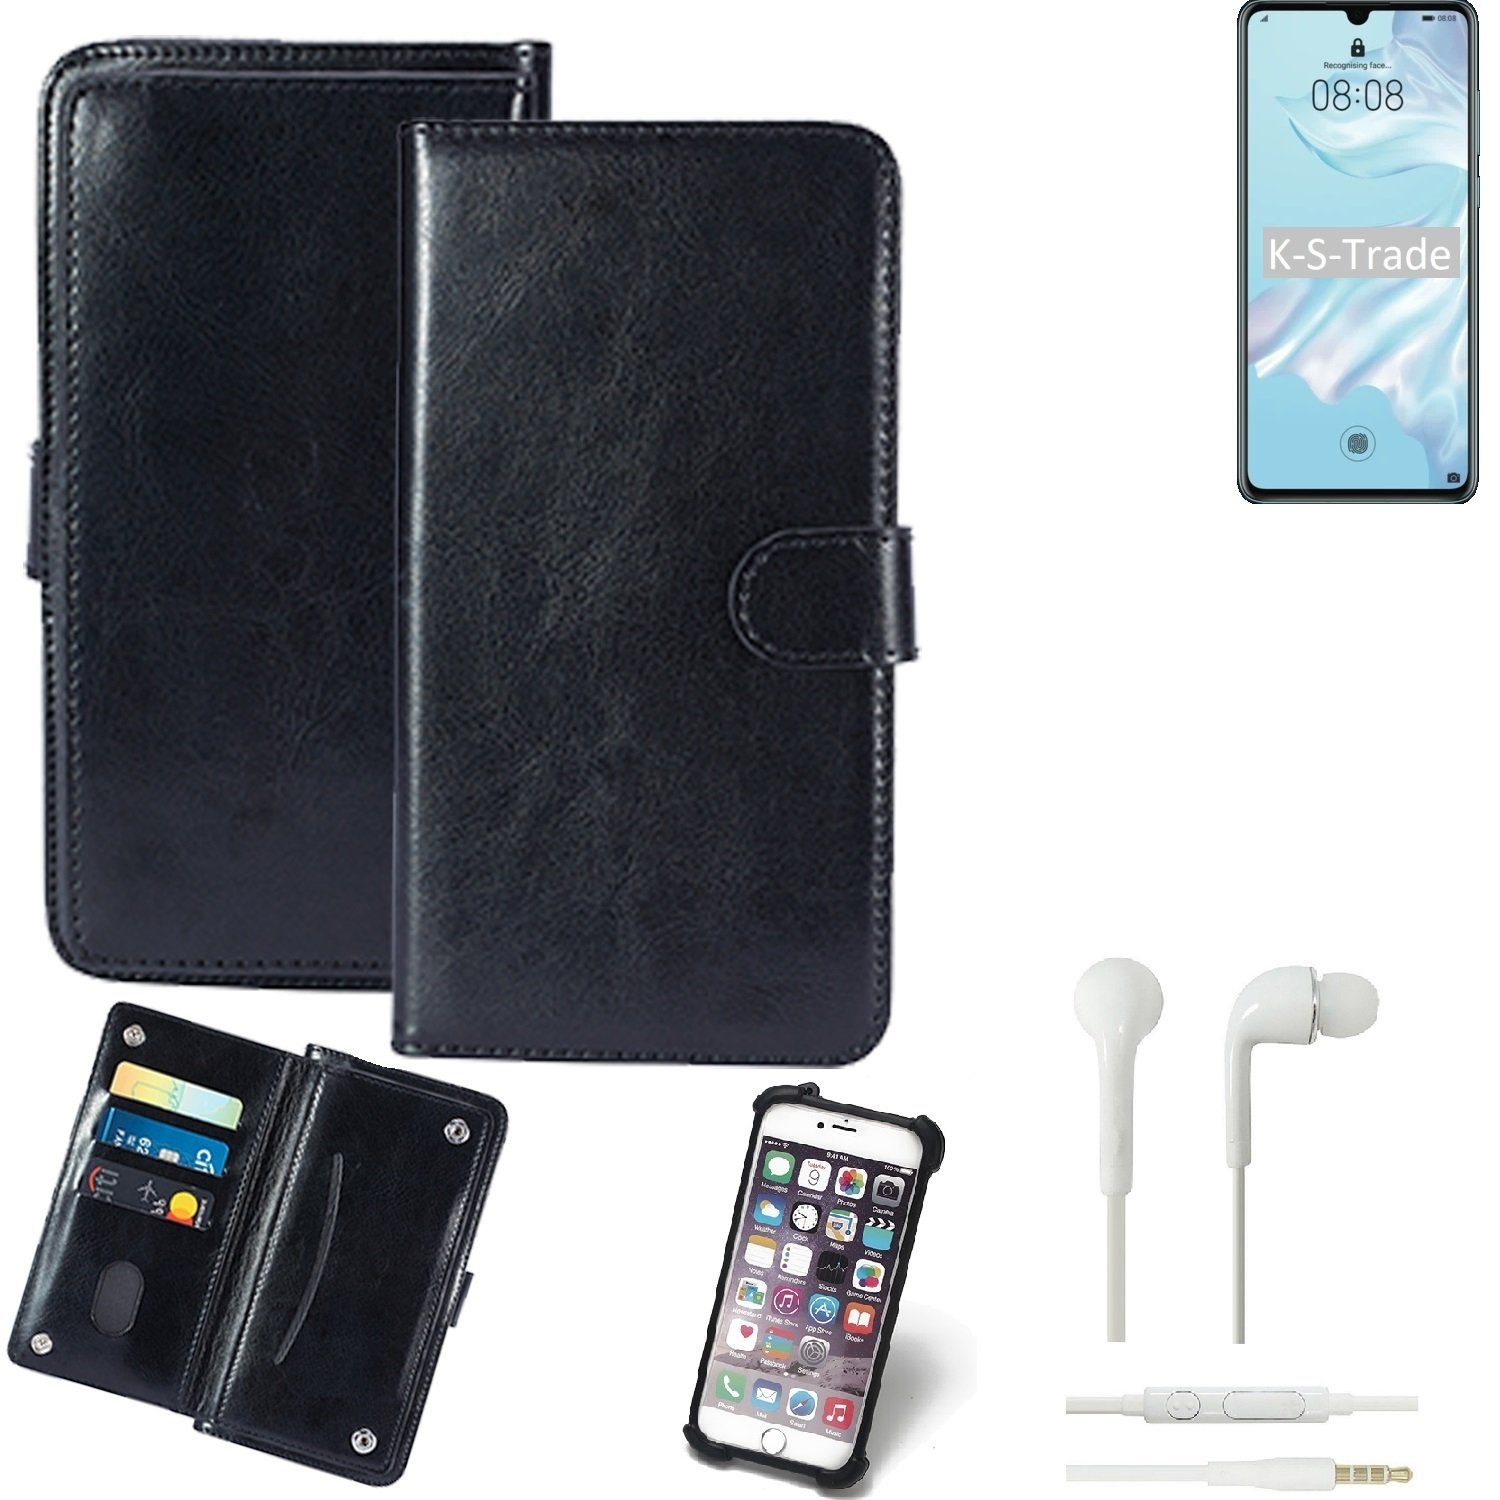 K-S-Trade Handyhülle für Huawei P30 Pro, 360° Hülle inkl. Headphones schwarz Kunstleder Case BookCase